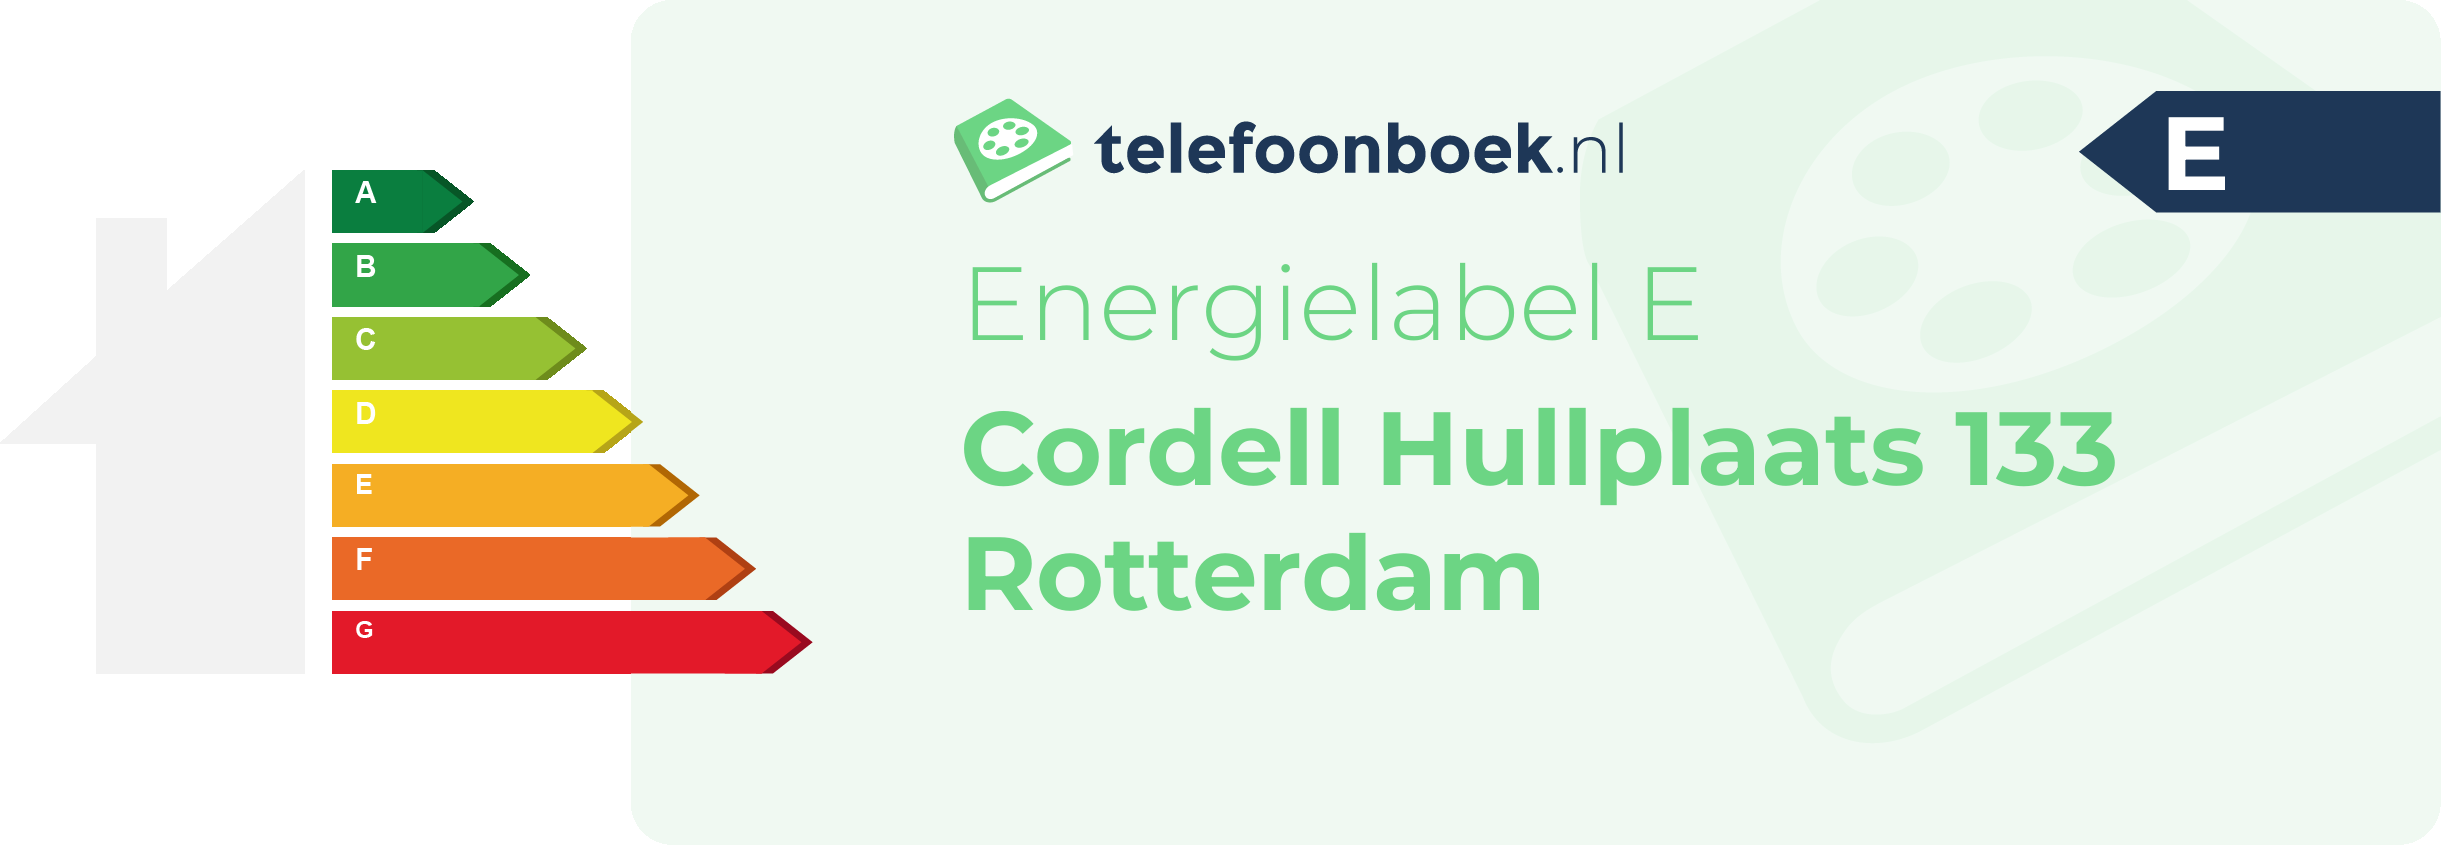 Energielabel Cordell Hullplaats 133 Rotterdam